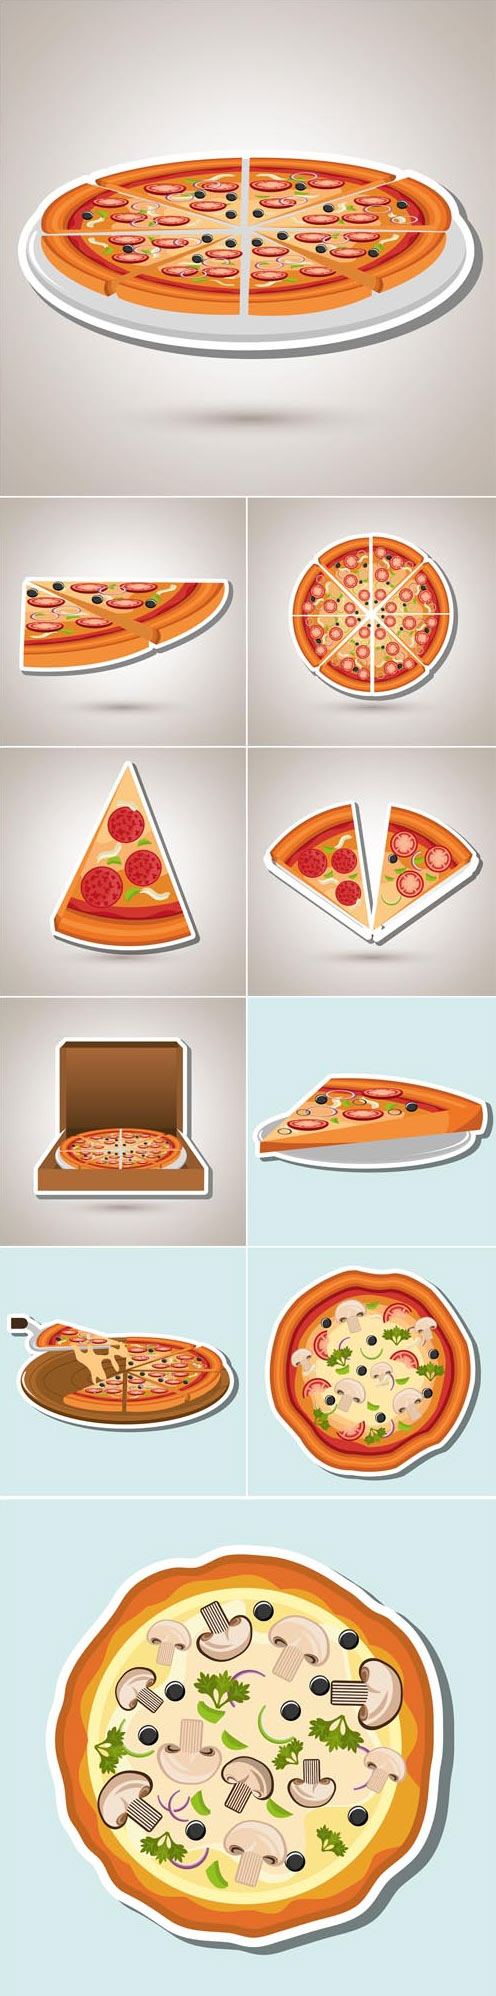 Vectors - Delicious Pizza Design